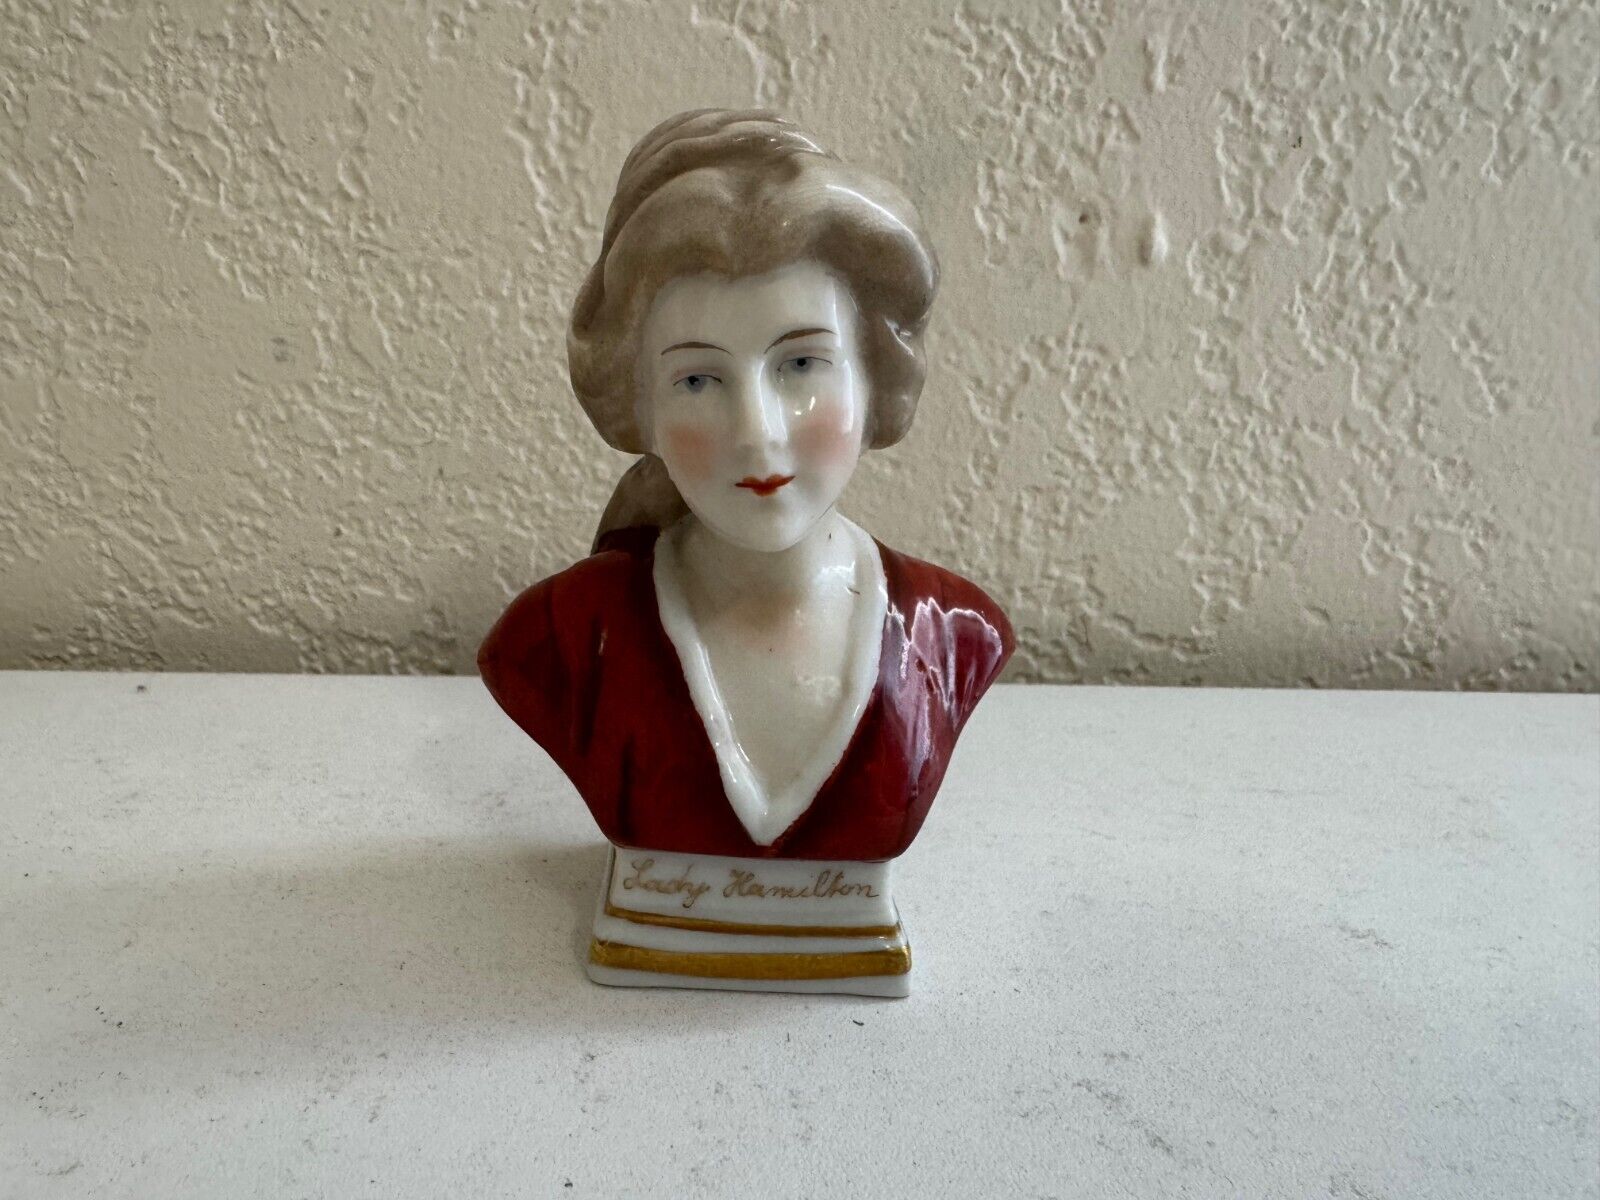 Antique Likely German Porcelain Miniature Bust of Lady Hamilton